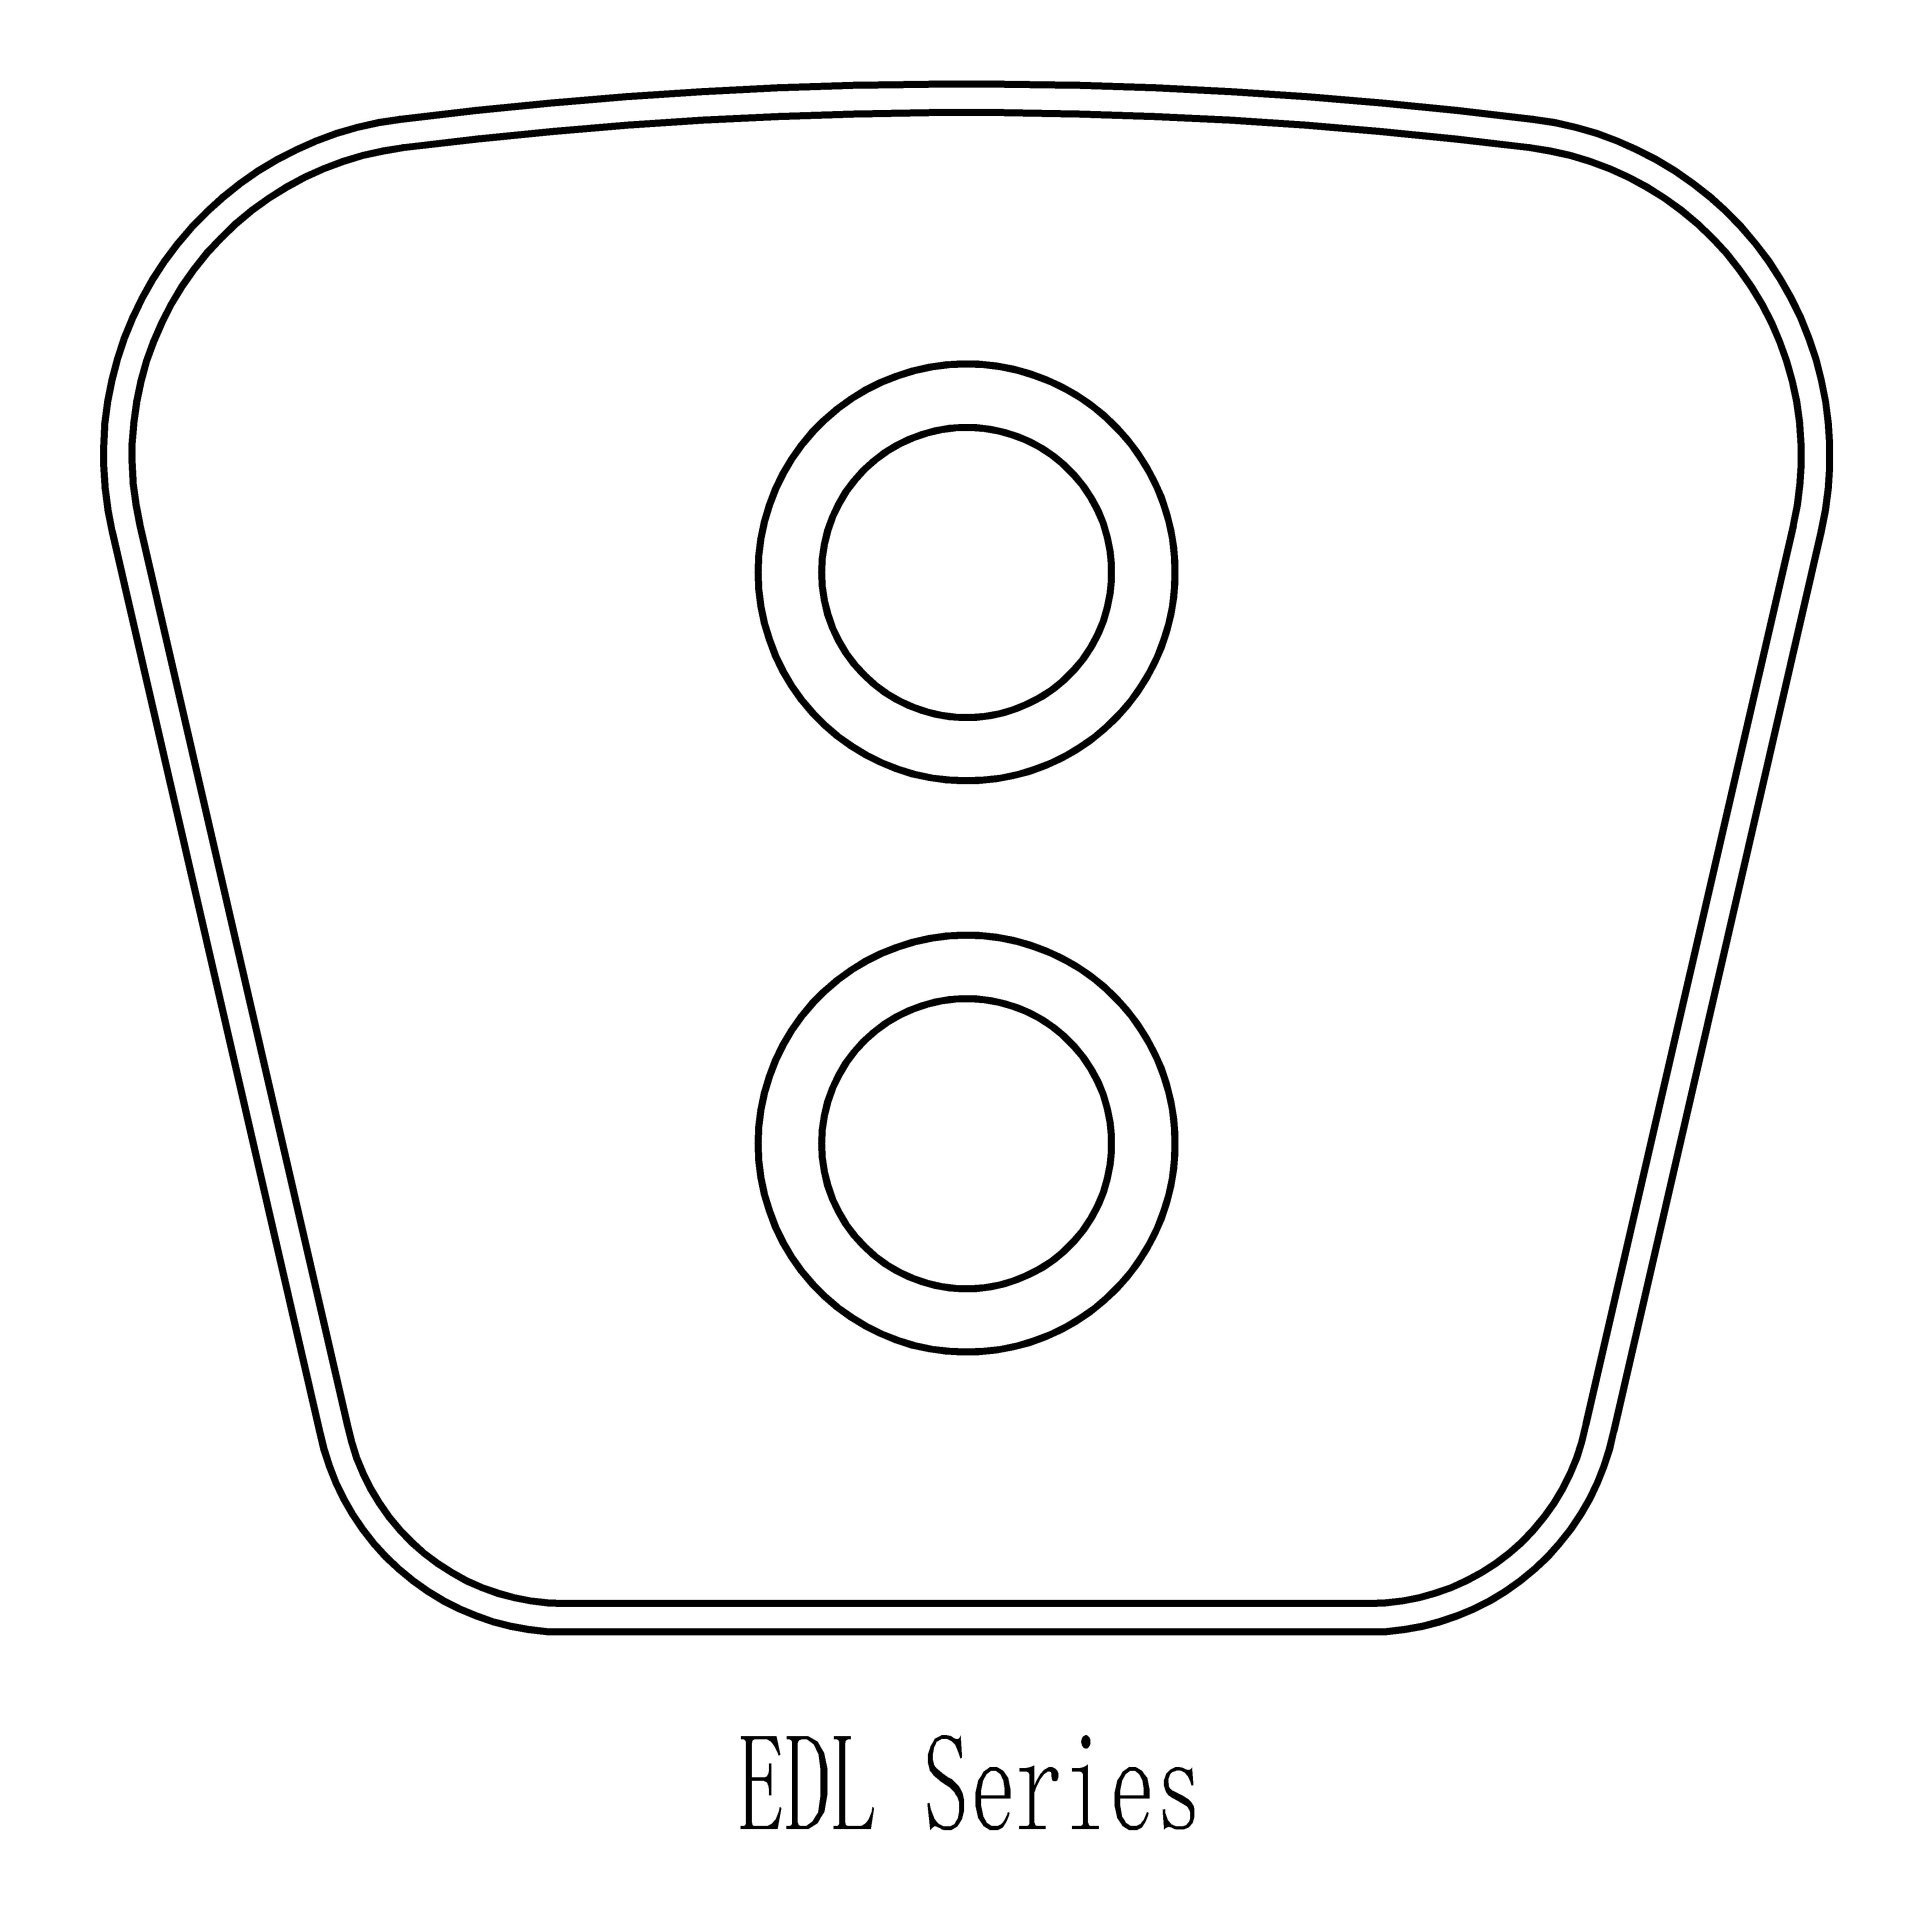 EDL series